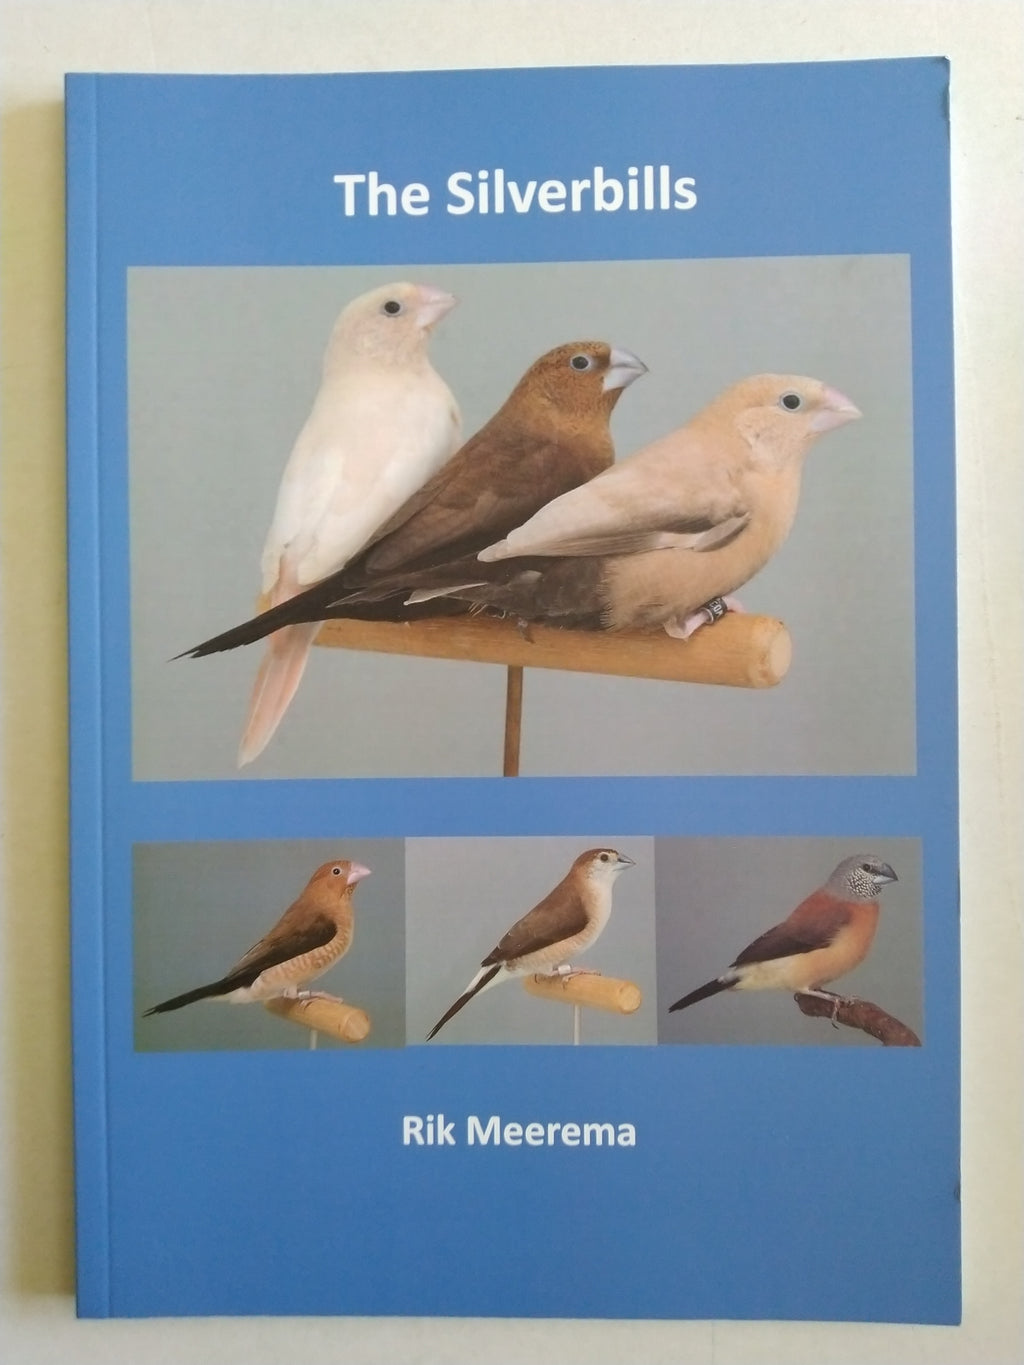 The Silverbills by Rik Meerema